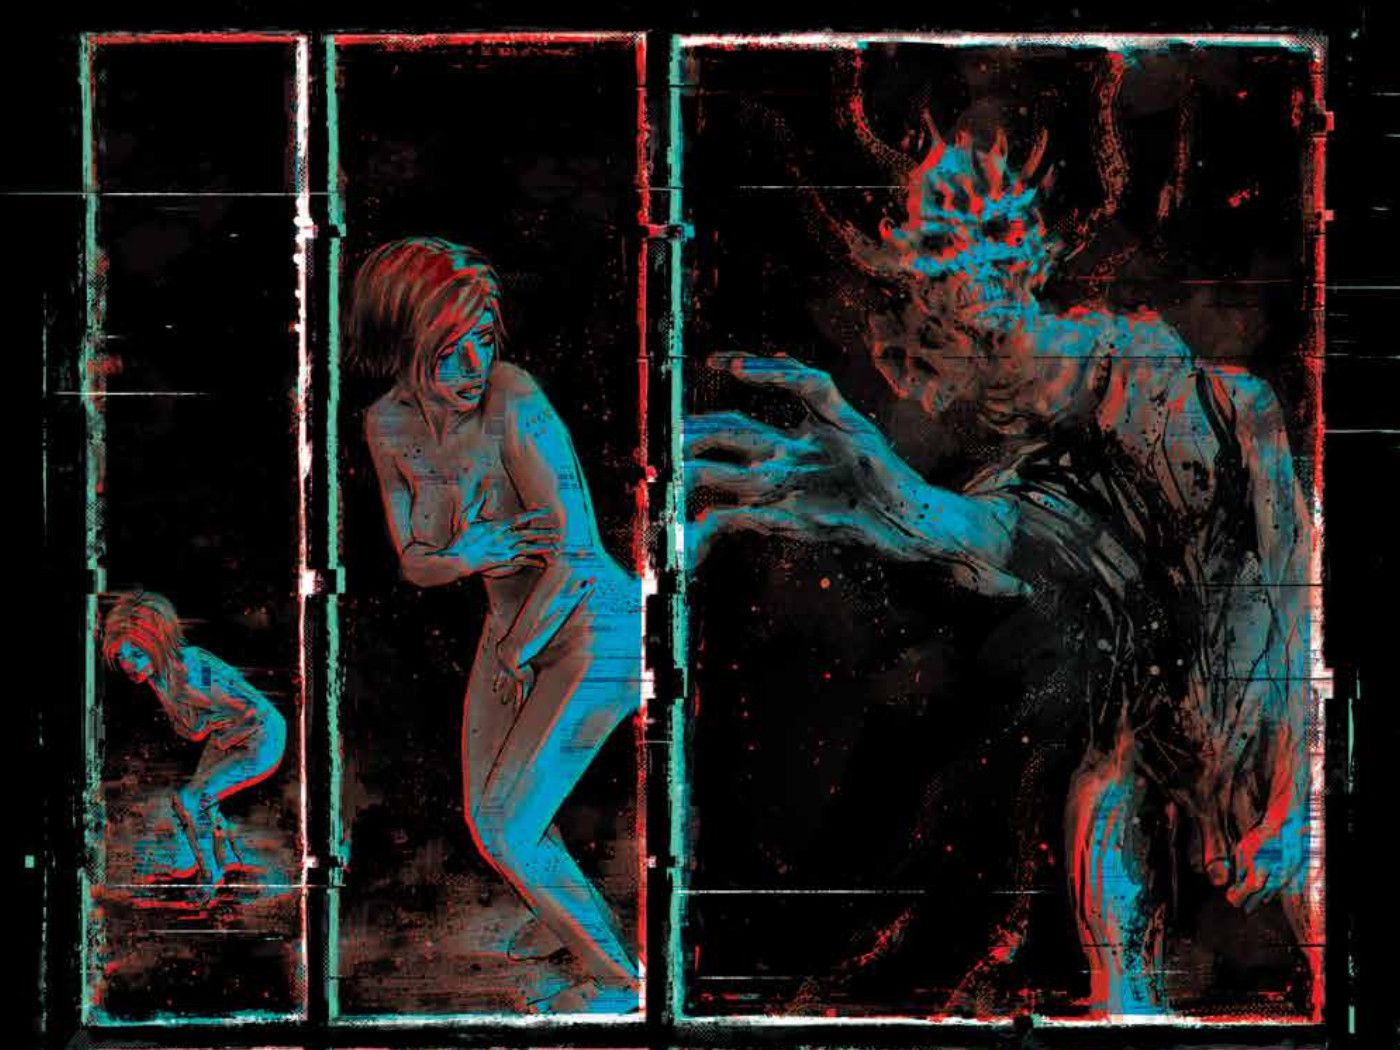 Image Comics' W0rldtr33 Vol 1. TP - three panels showing a horrific entity reaching for a woman